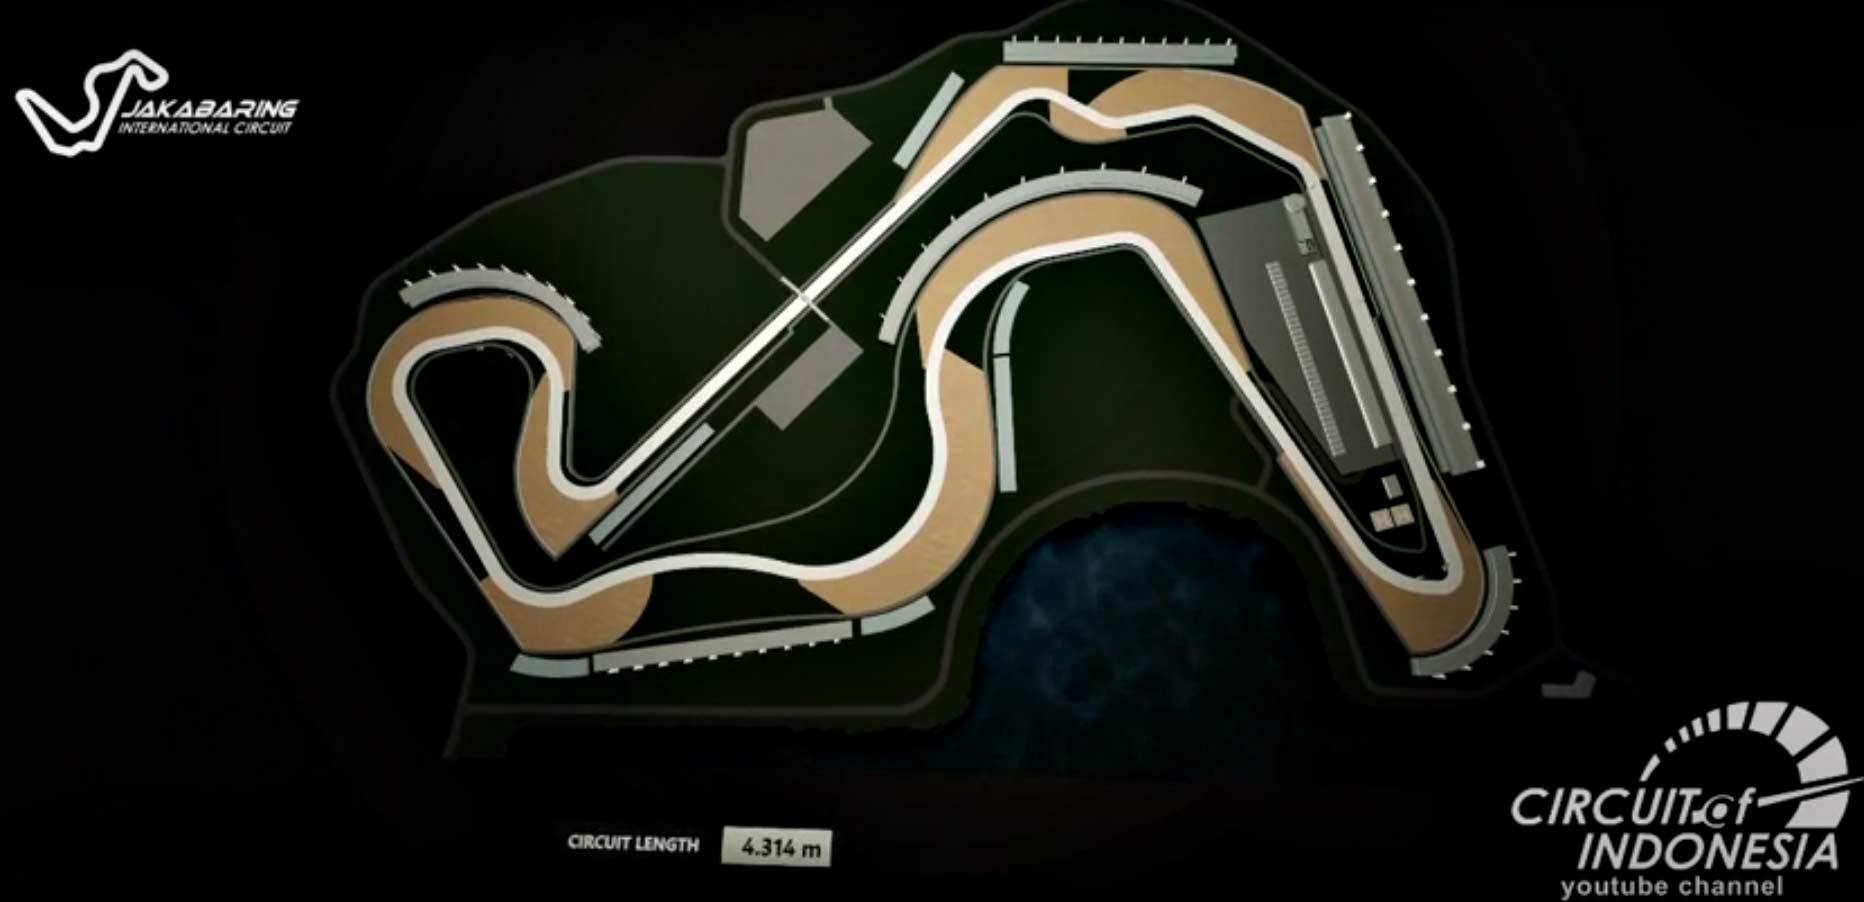 Intip Rancangan Visual Sirkuit MotoGP Jakabaring 2018 Honda